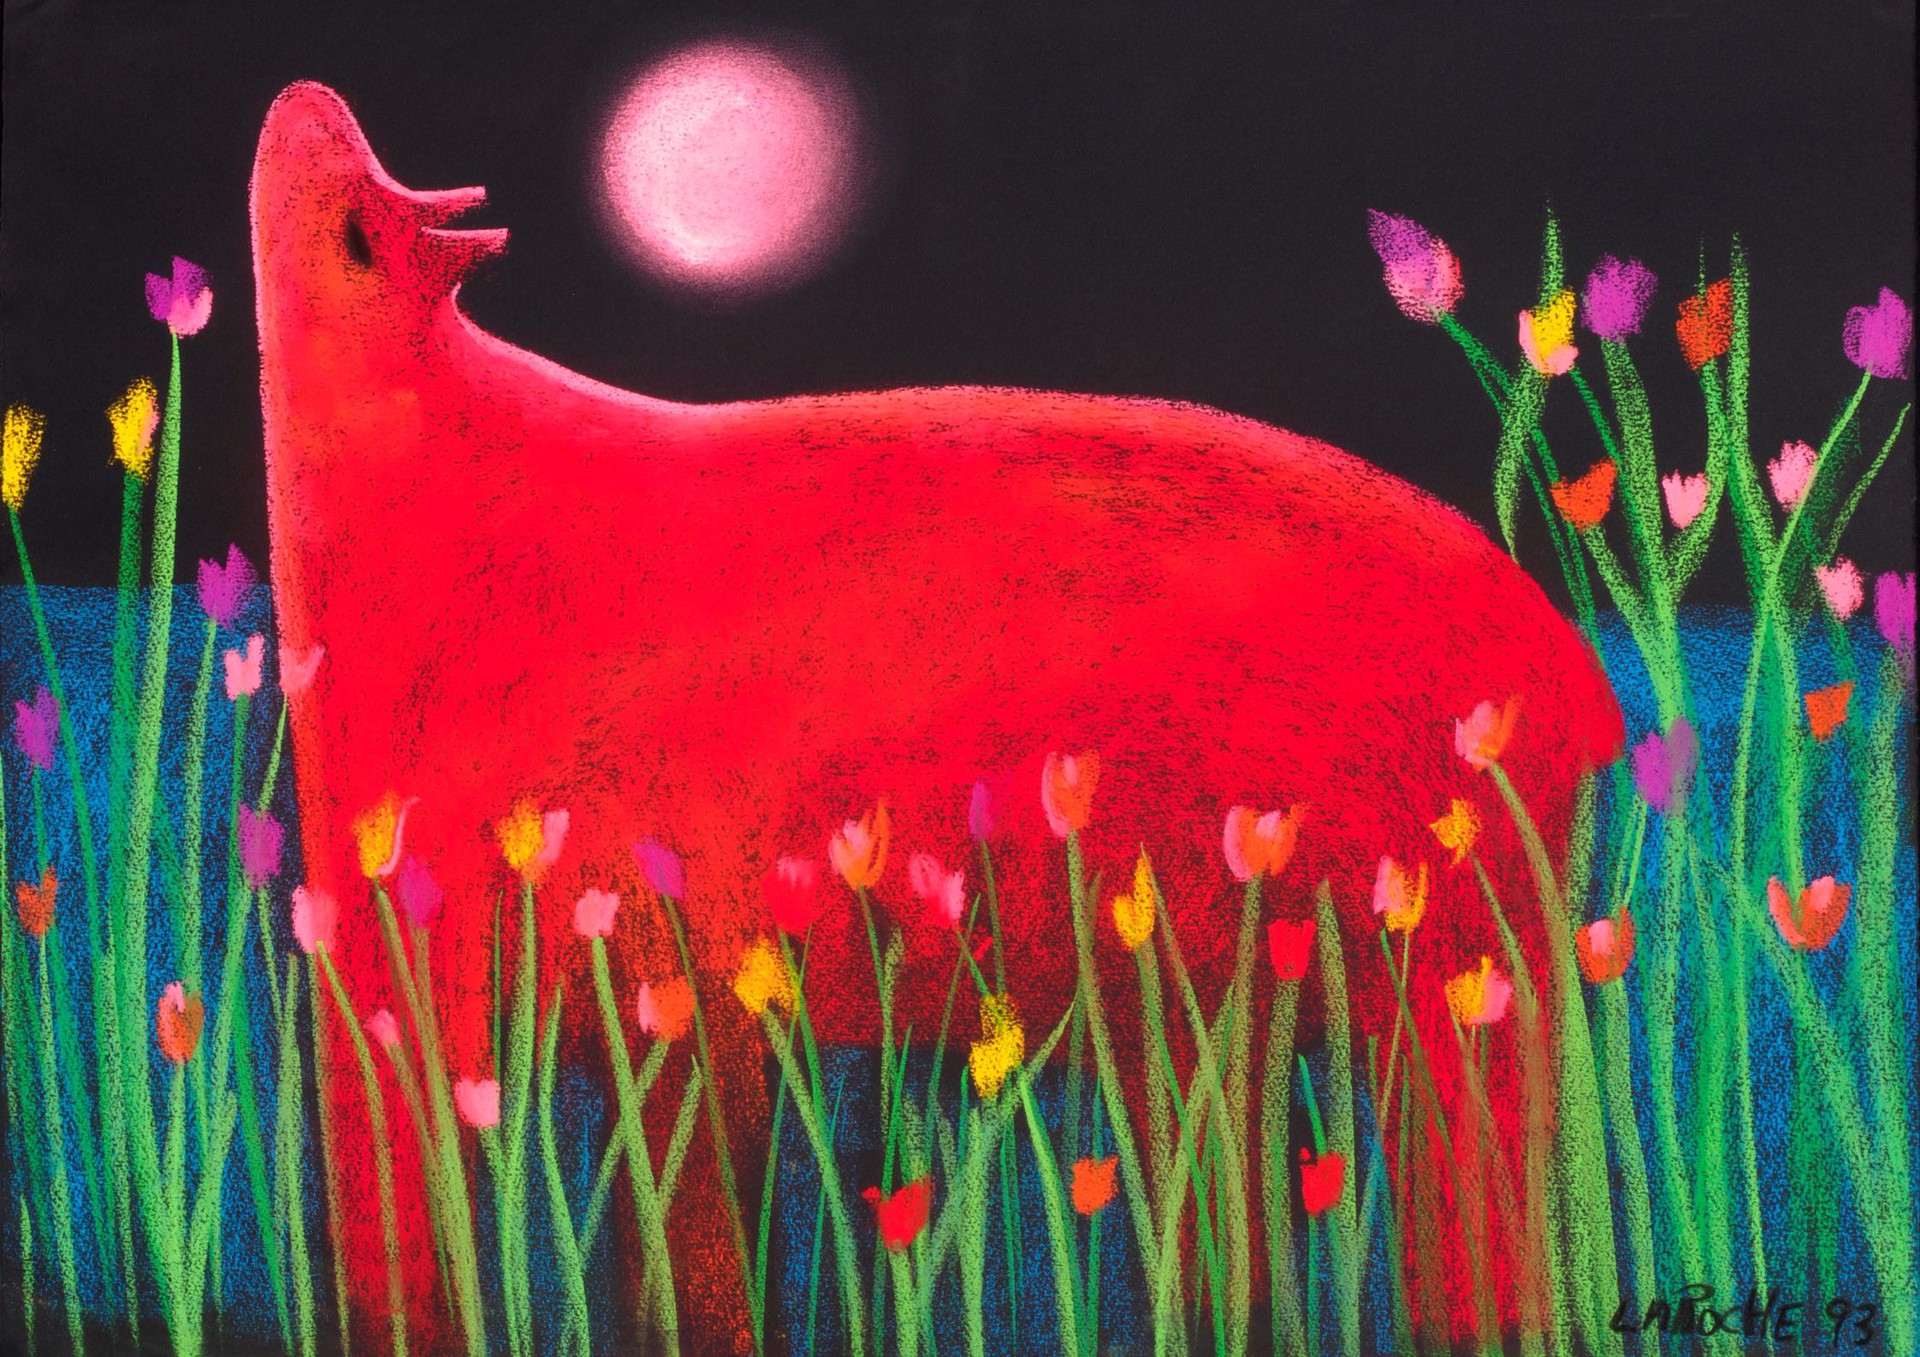 Red Bear/Red Moon by Carole LaRoche